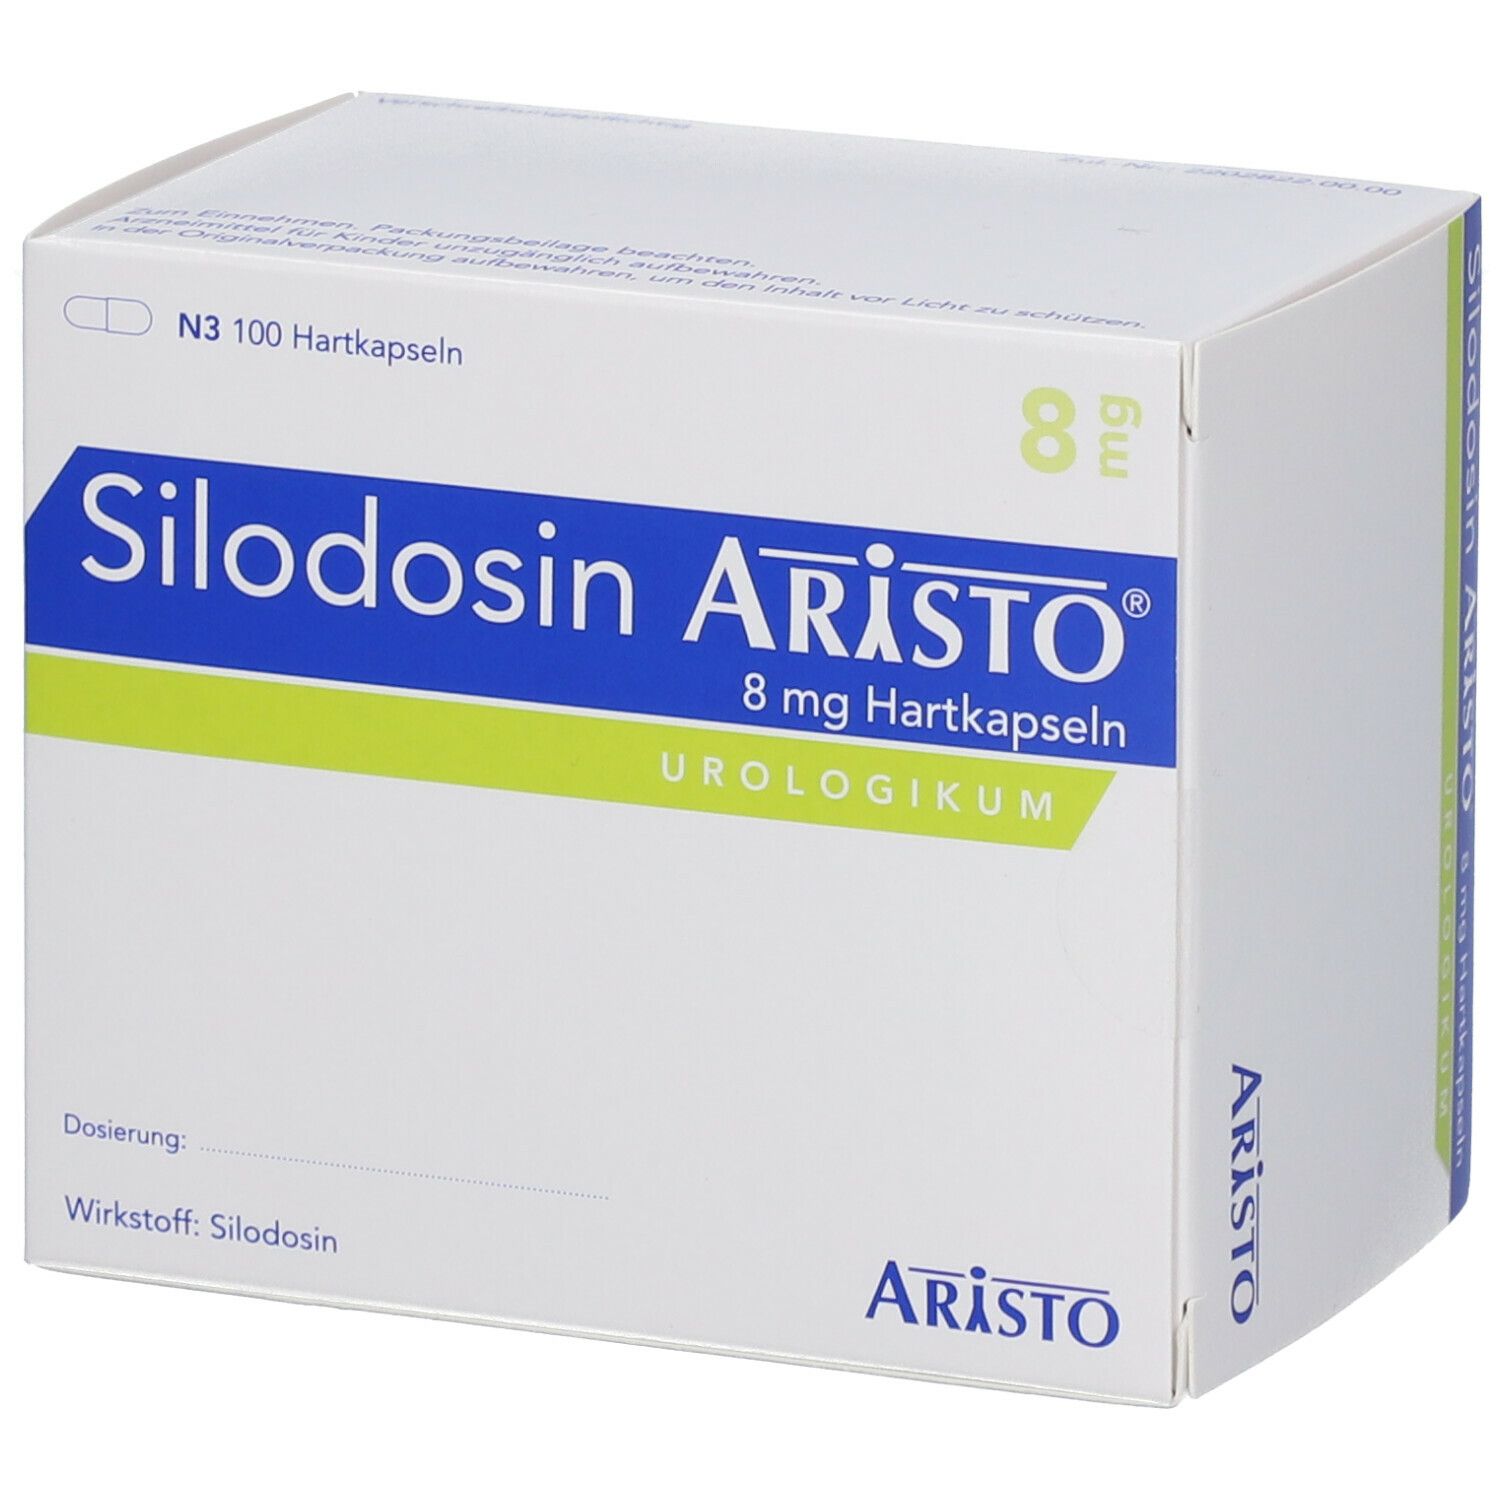 Silodosin Aristo® 8 mg